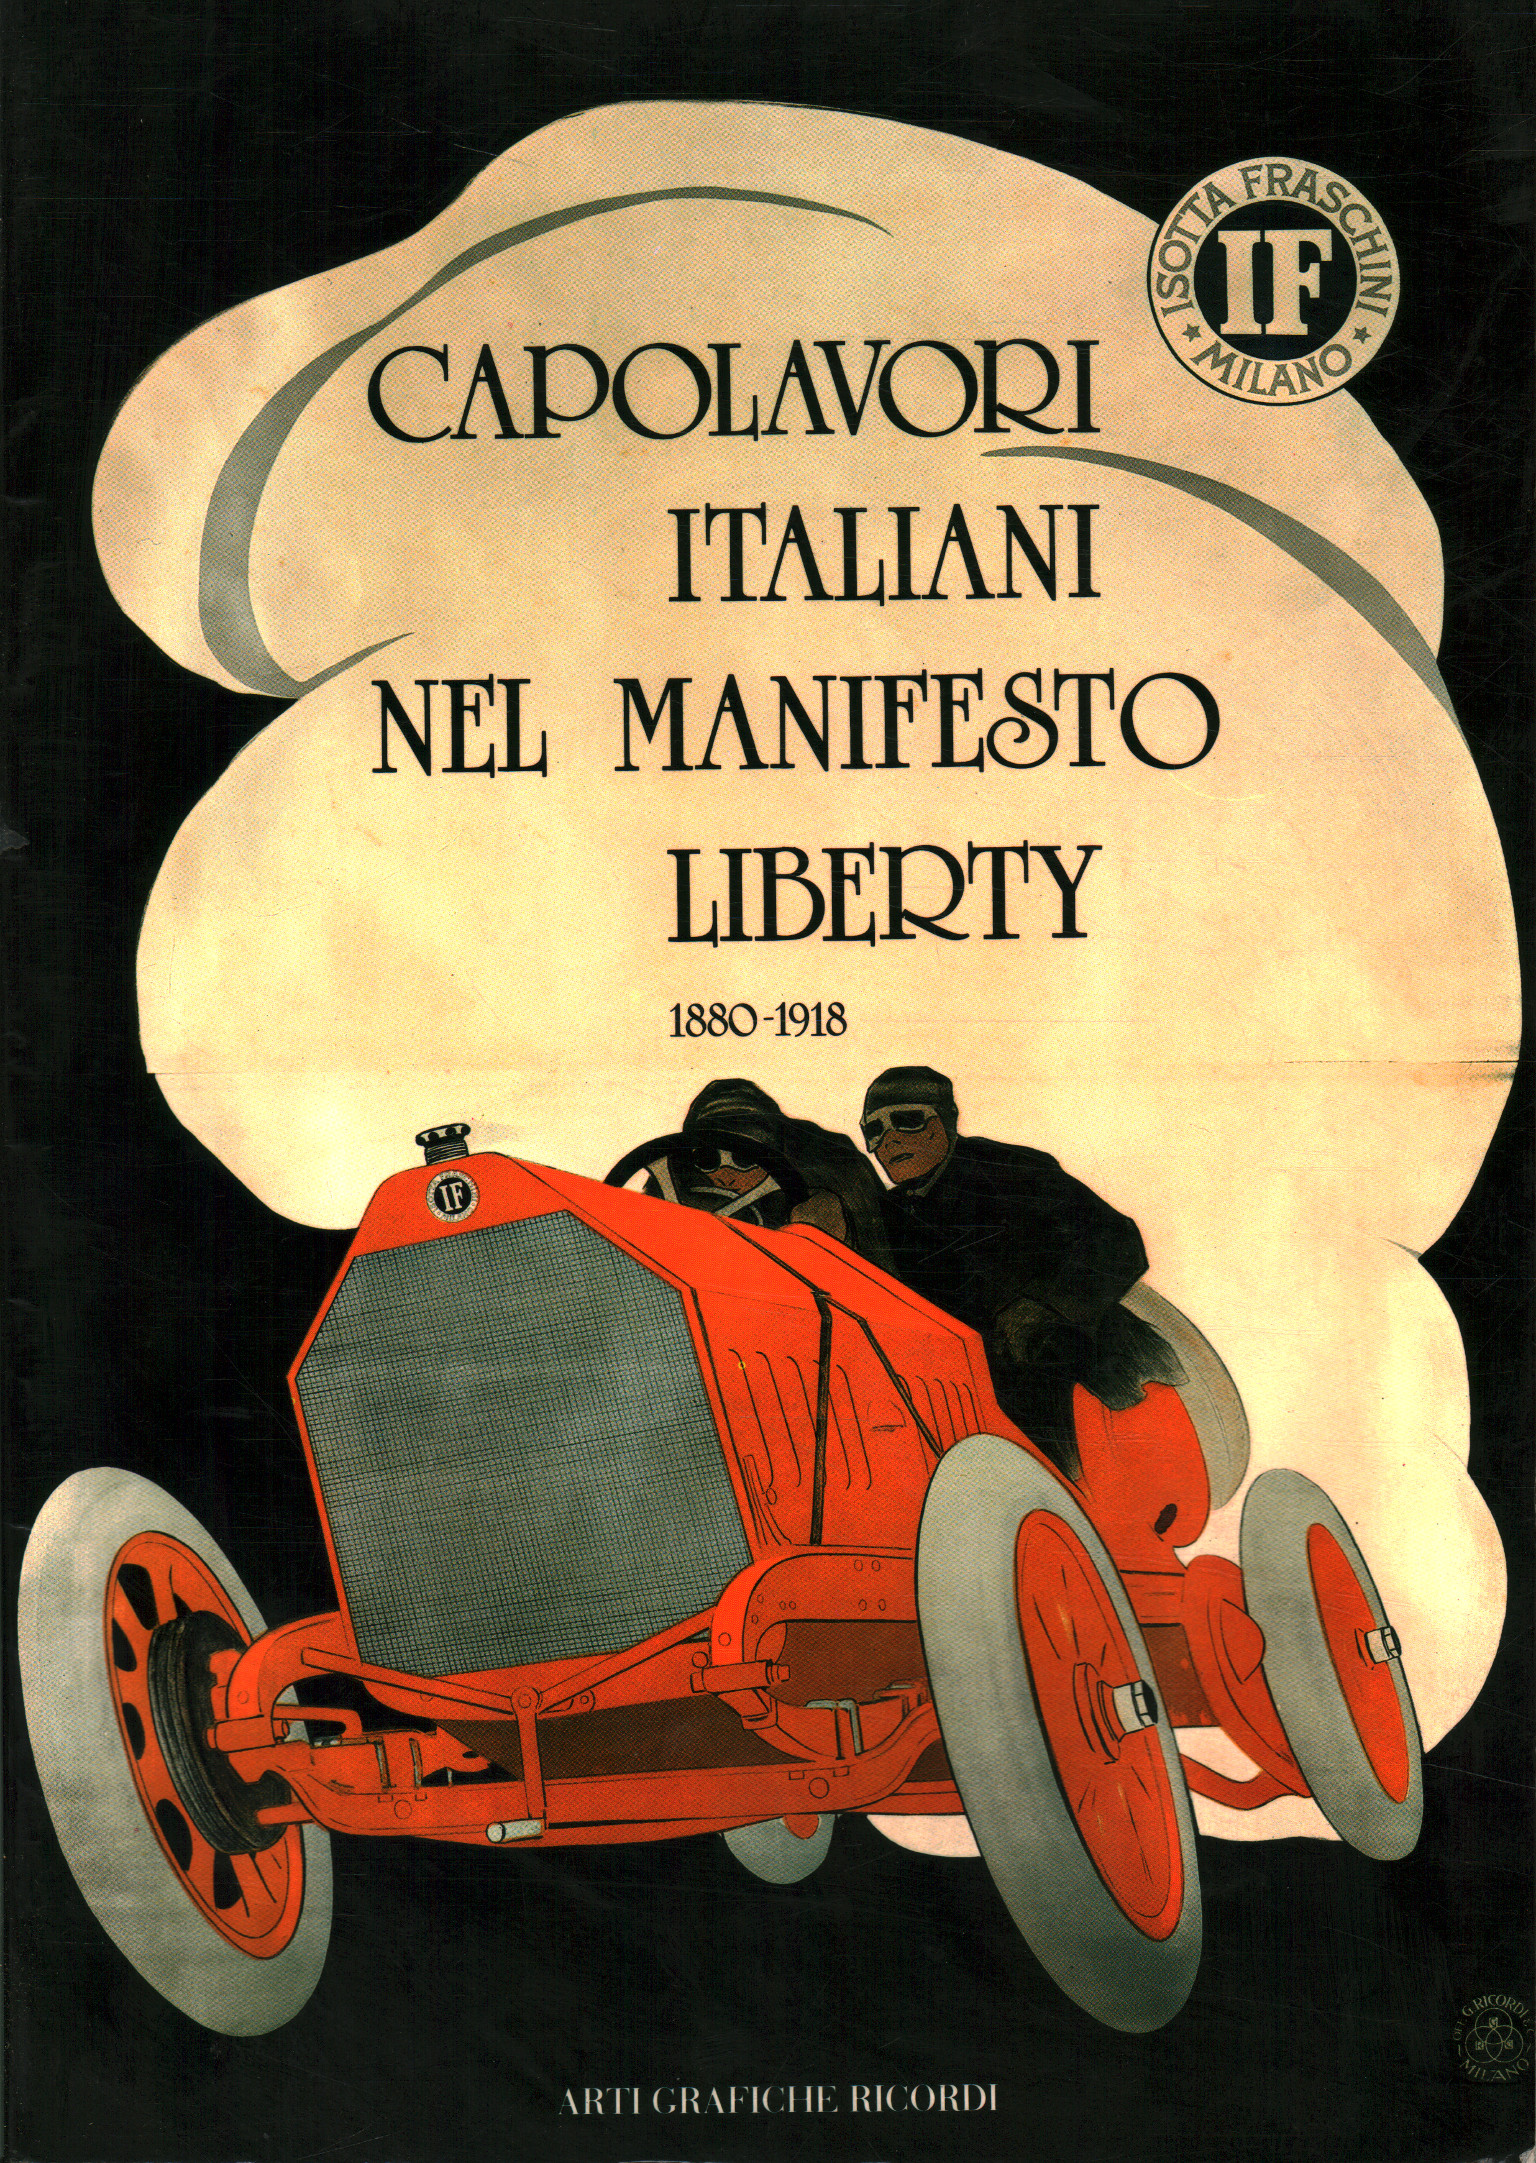 Italian masterpieces in the Liberty manifesto.